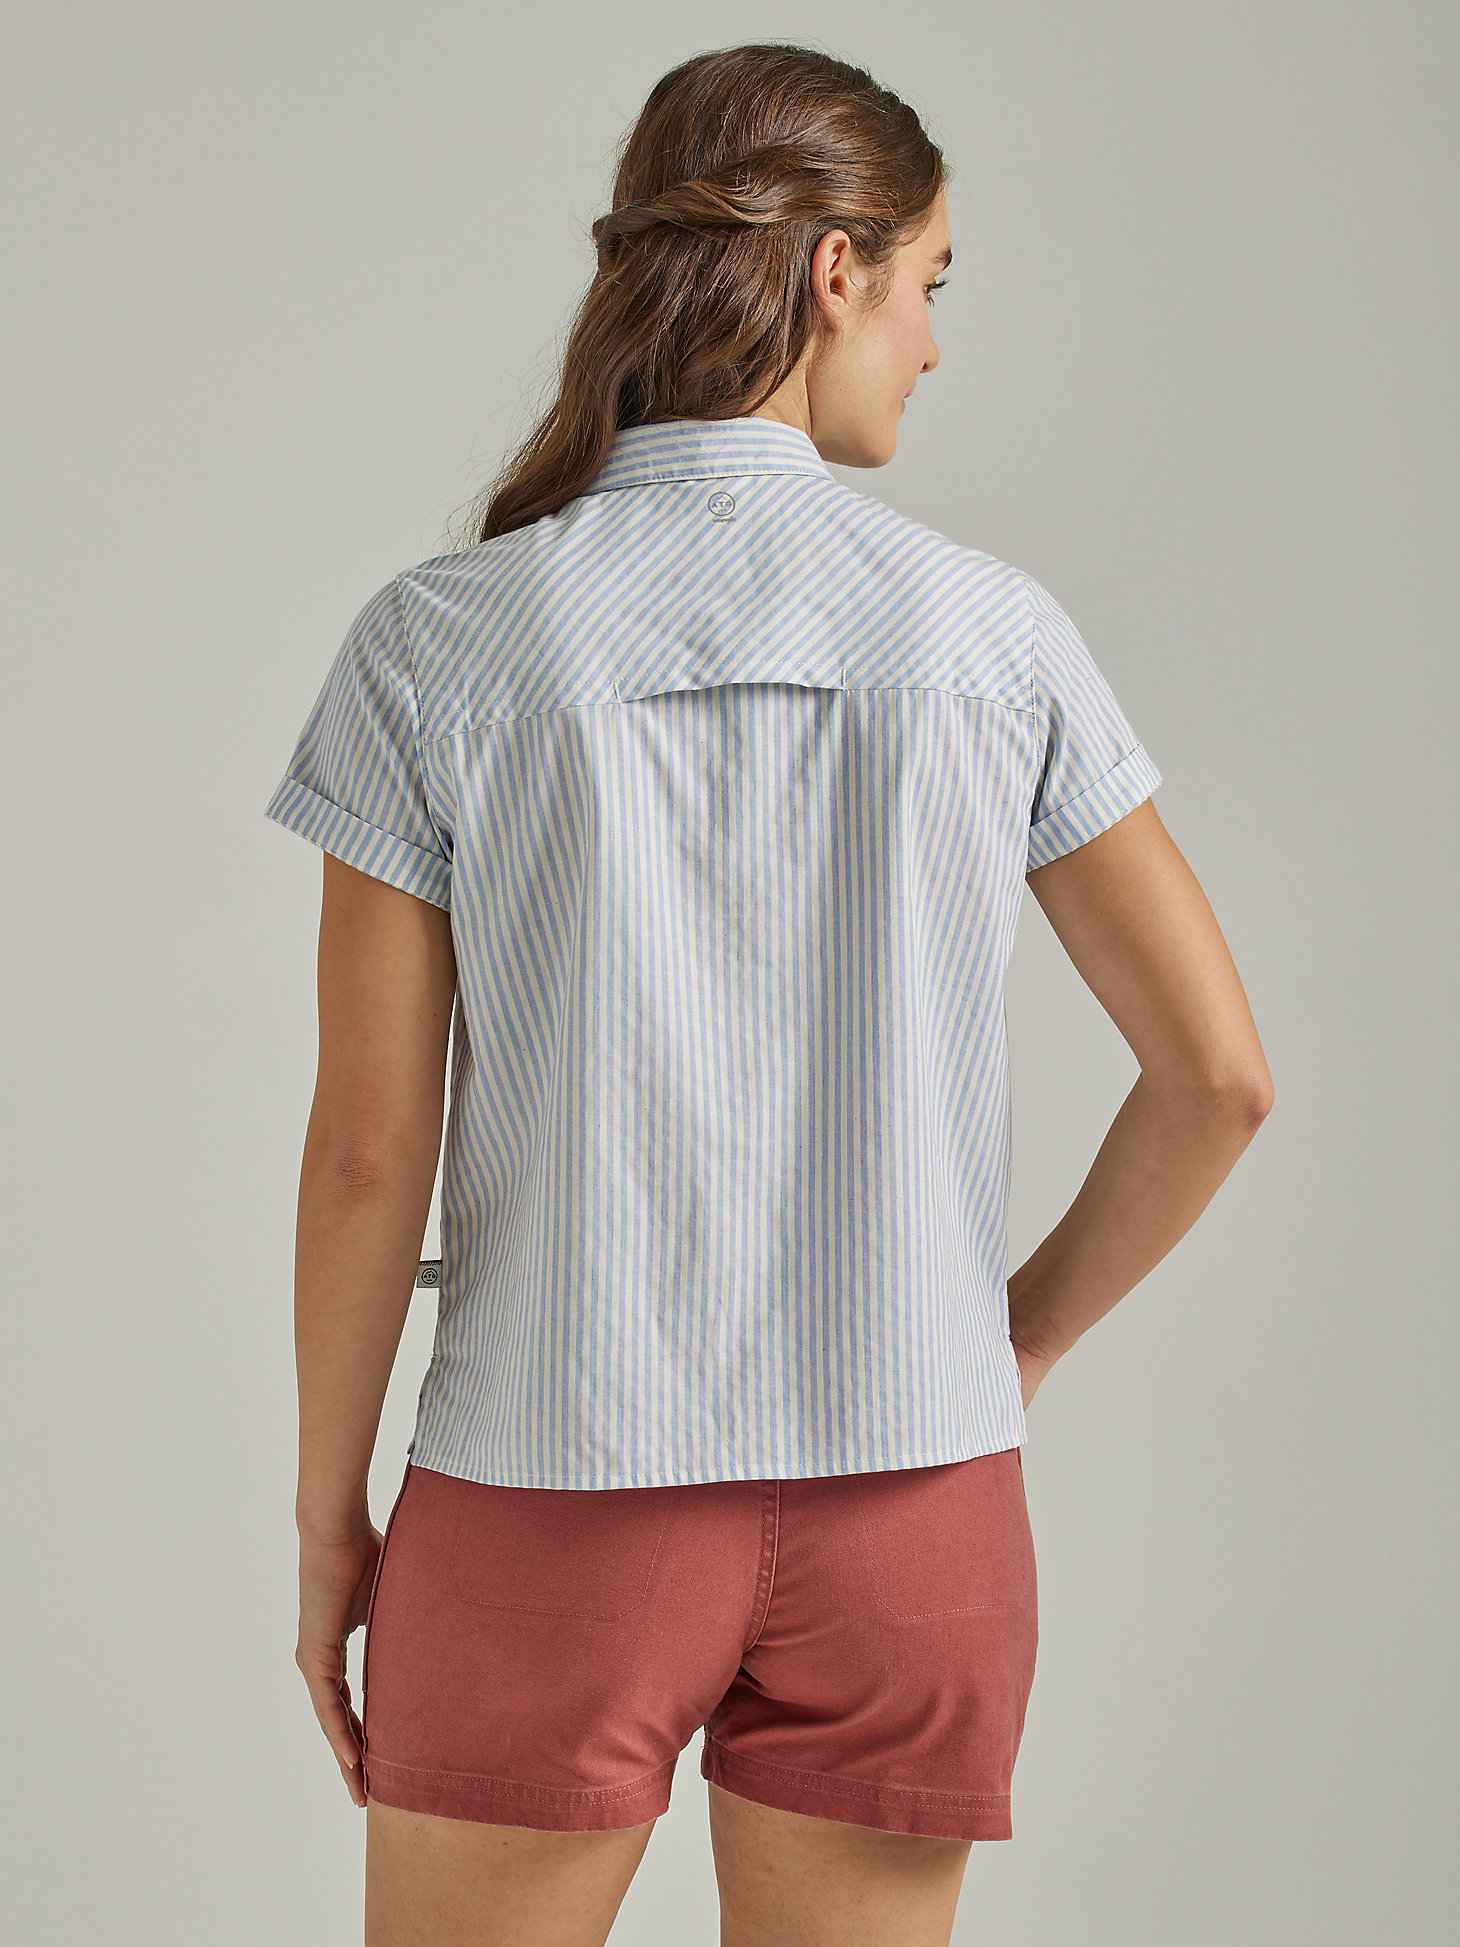 ATG By Wrangler® Women's Breeze Stripe Shirt in Spring Water alternative view 2